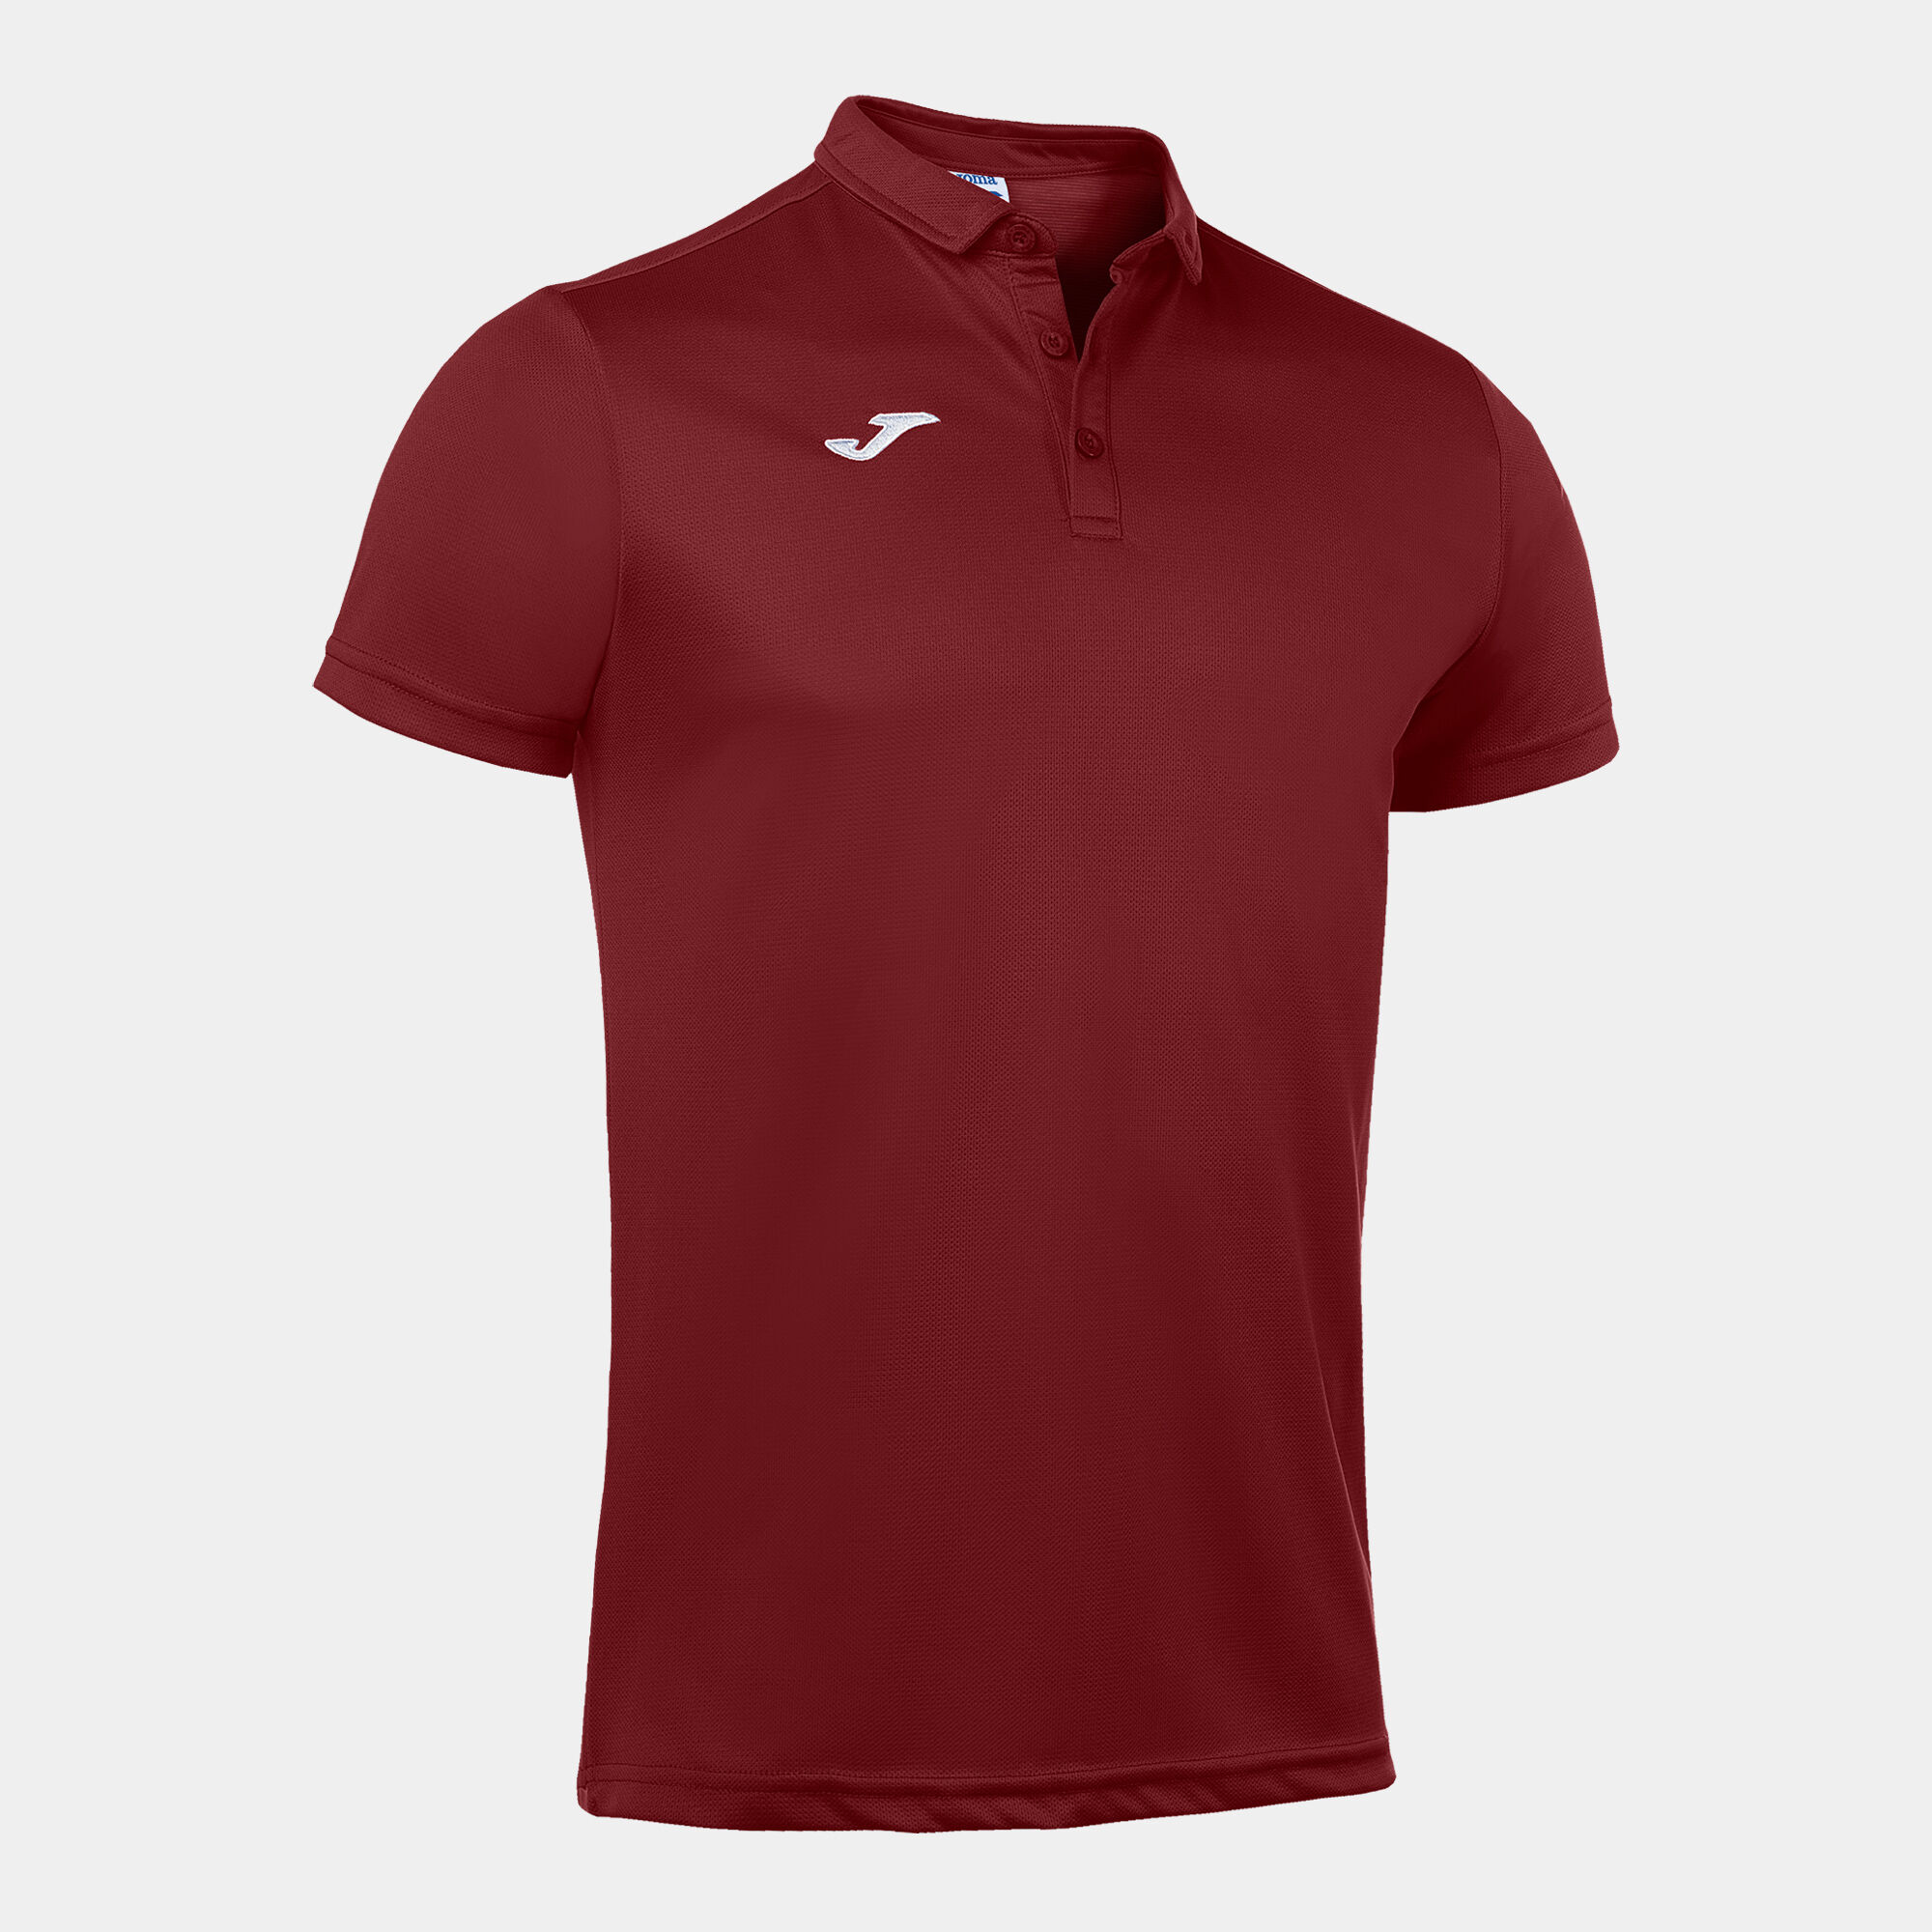 Polo shirt short-sleeve man Hobby burgundy